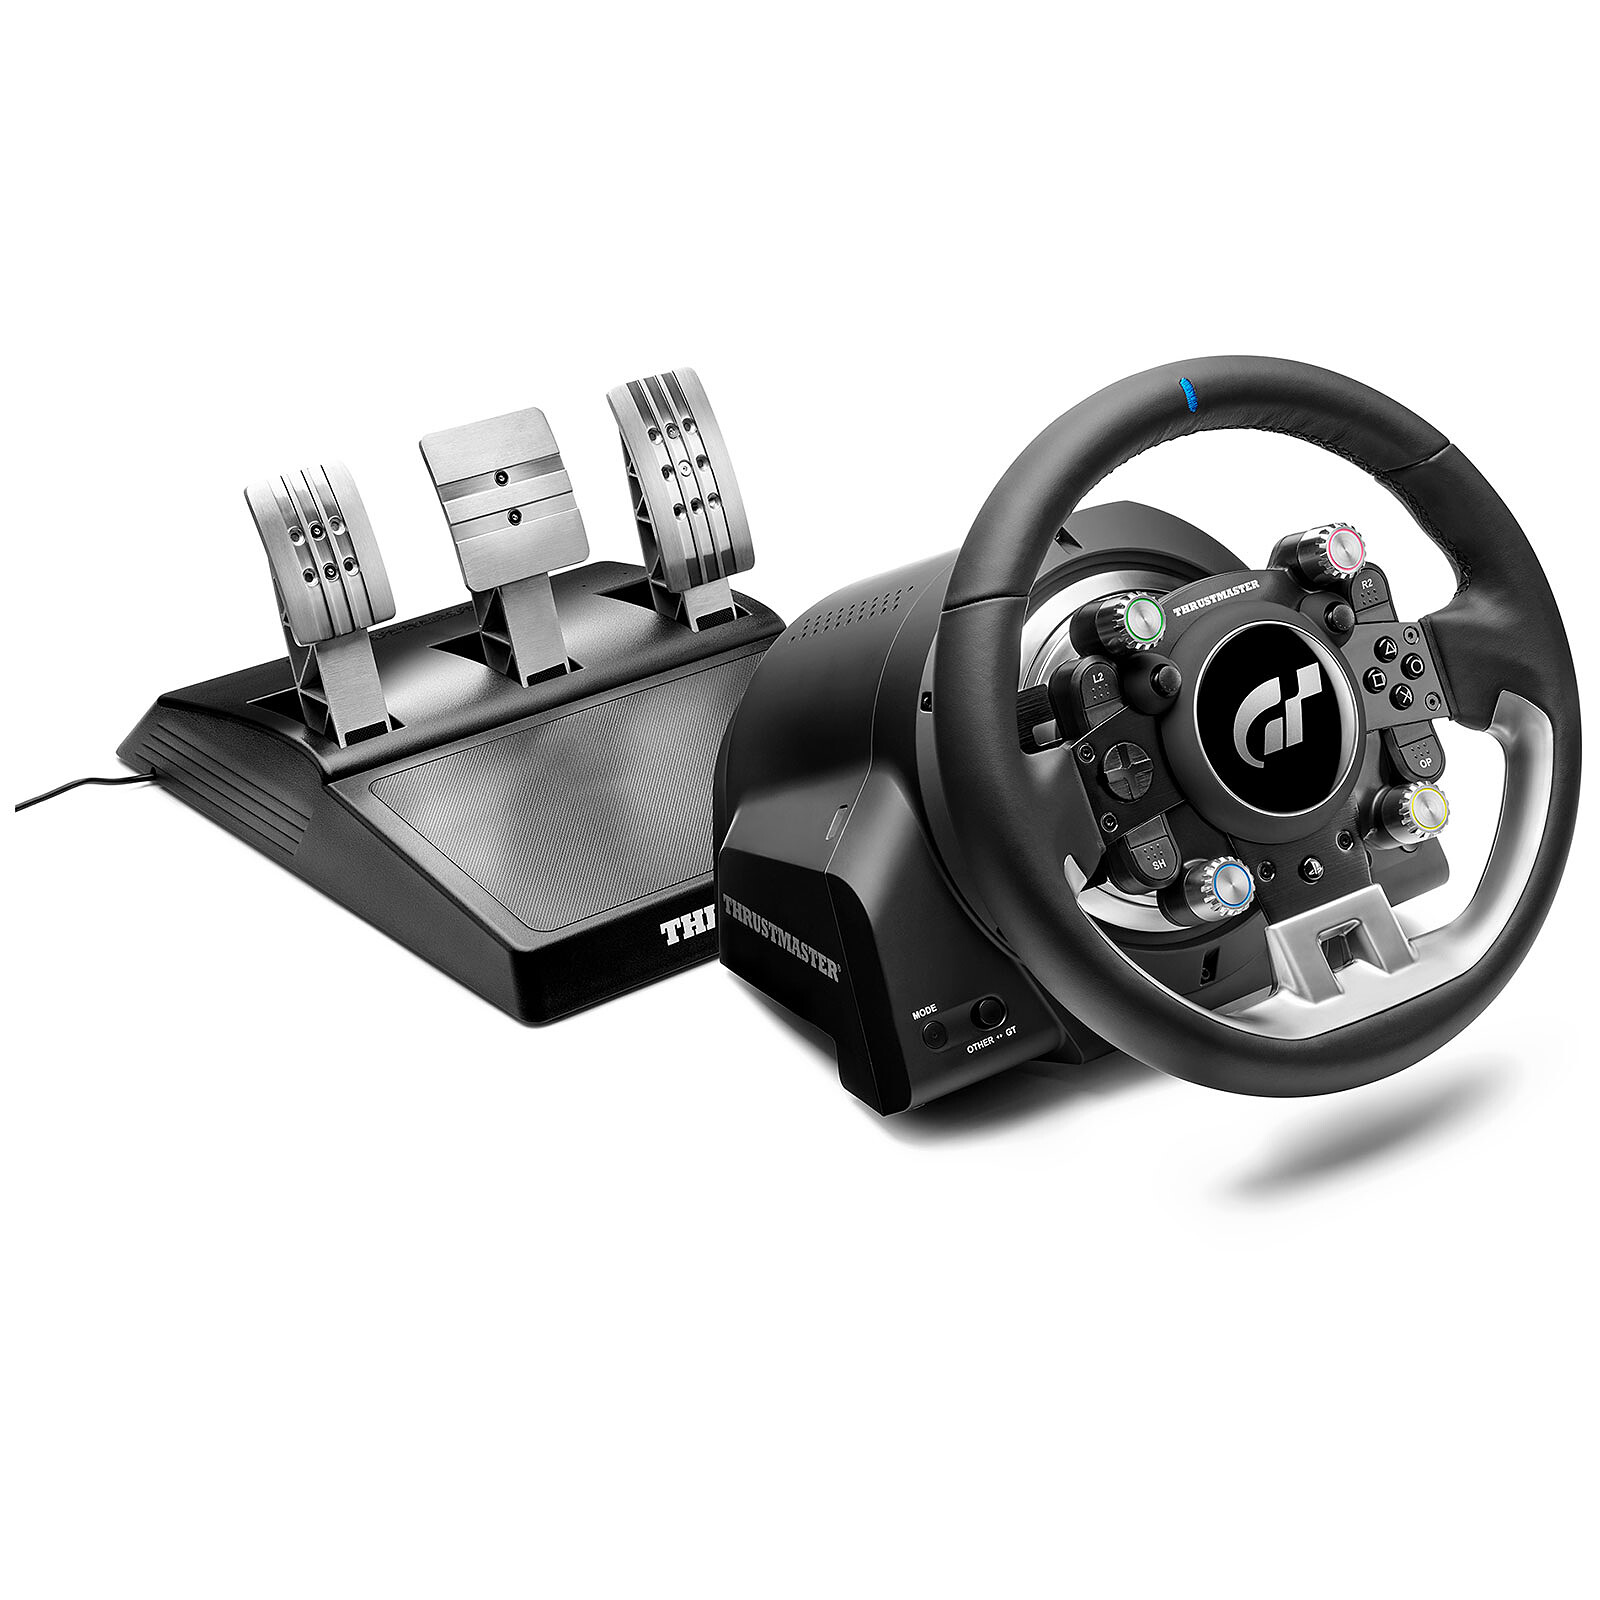 Thrustmaster T-GT II - PC game racing wheel - LDLC 3-year warranty